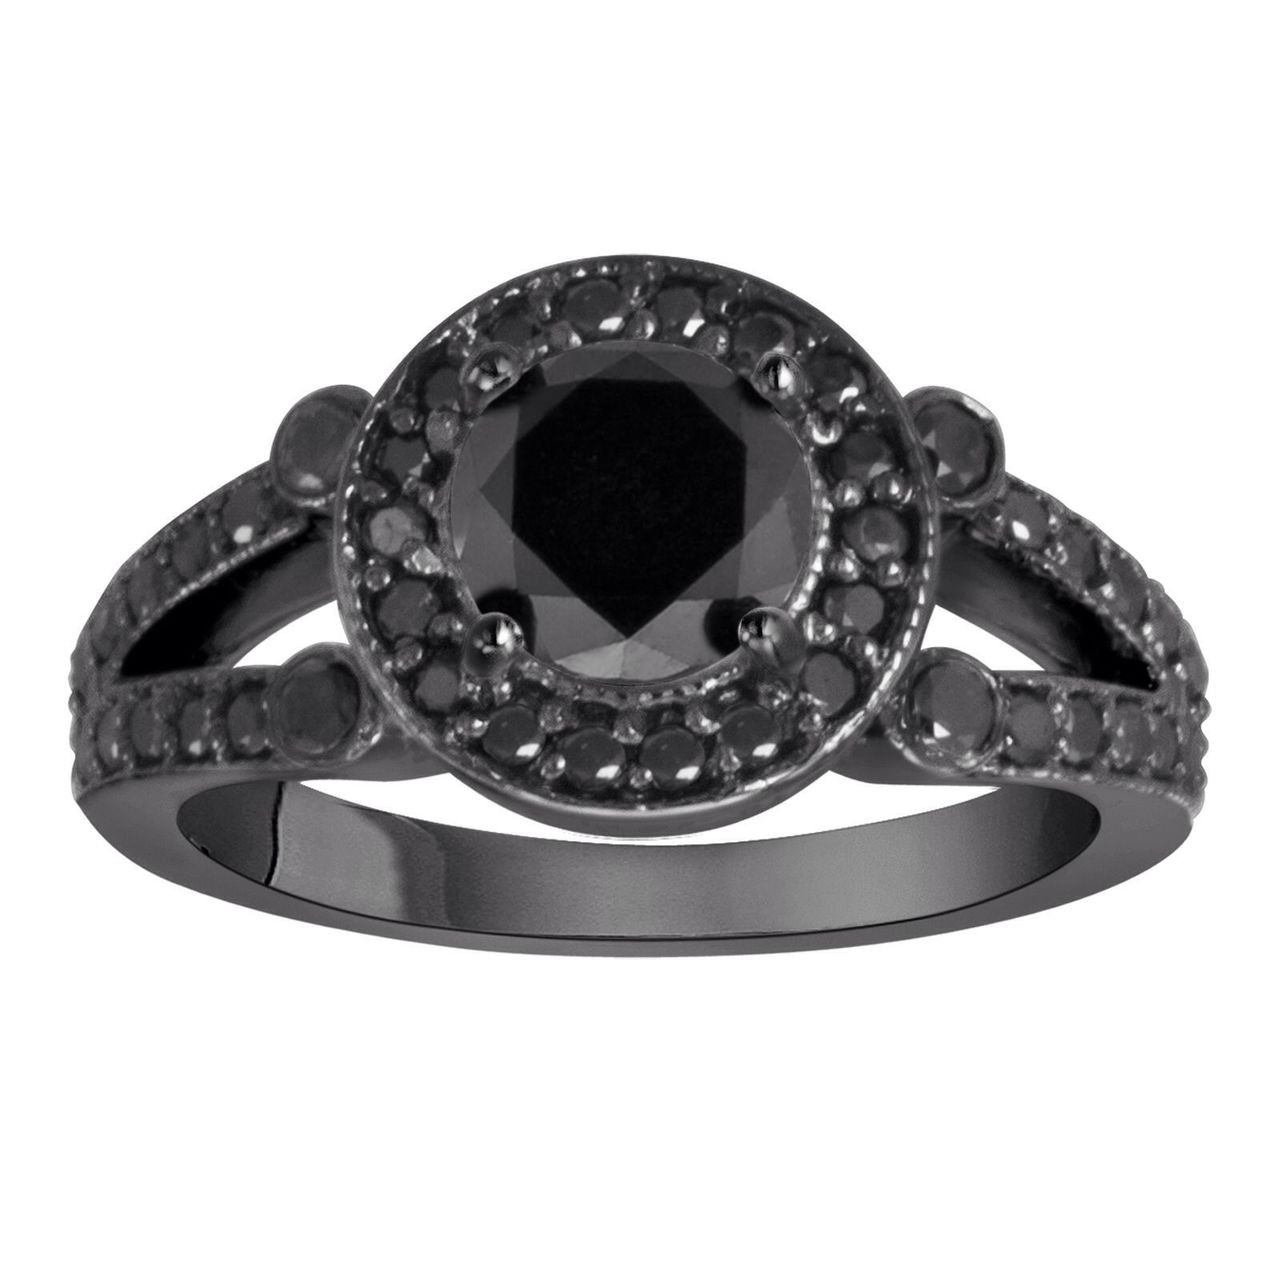  Black  Diamond Engagement  Ring  14k Black  Gold  1 60 Carat 